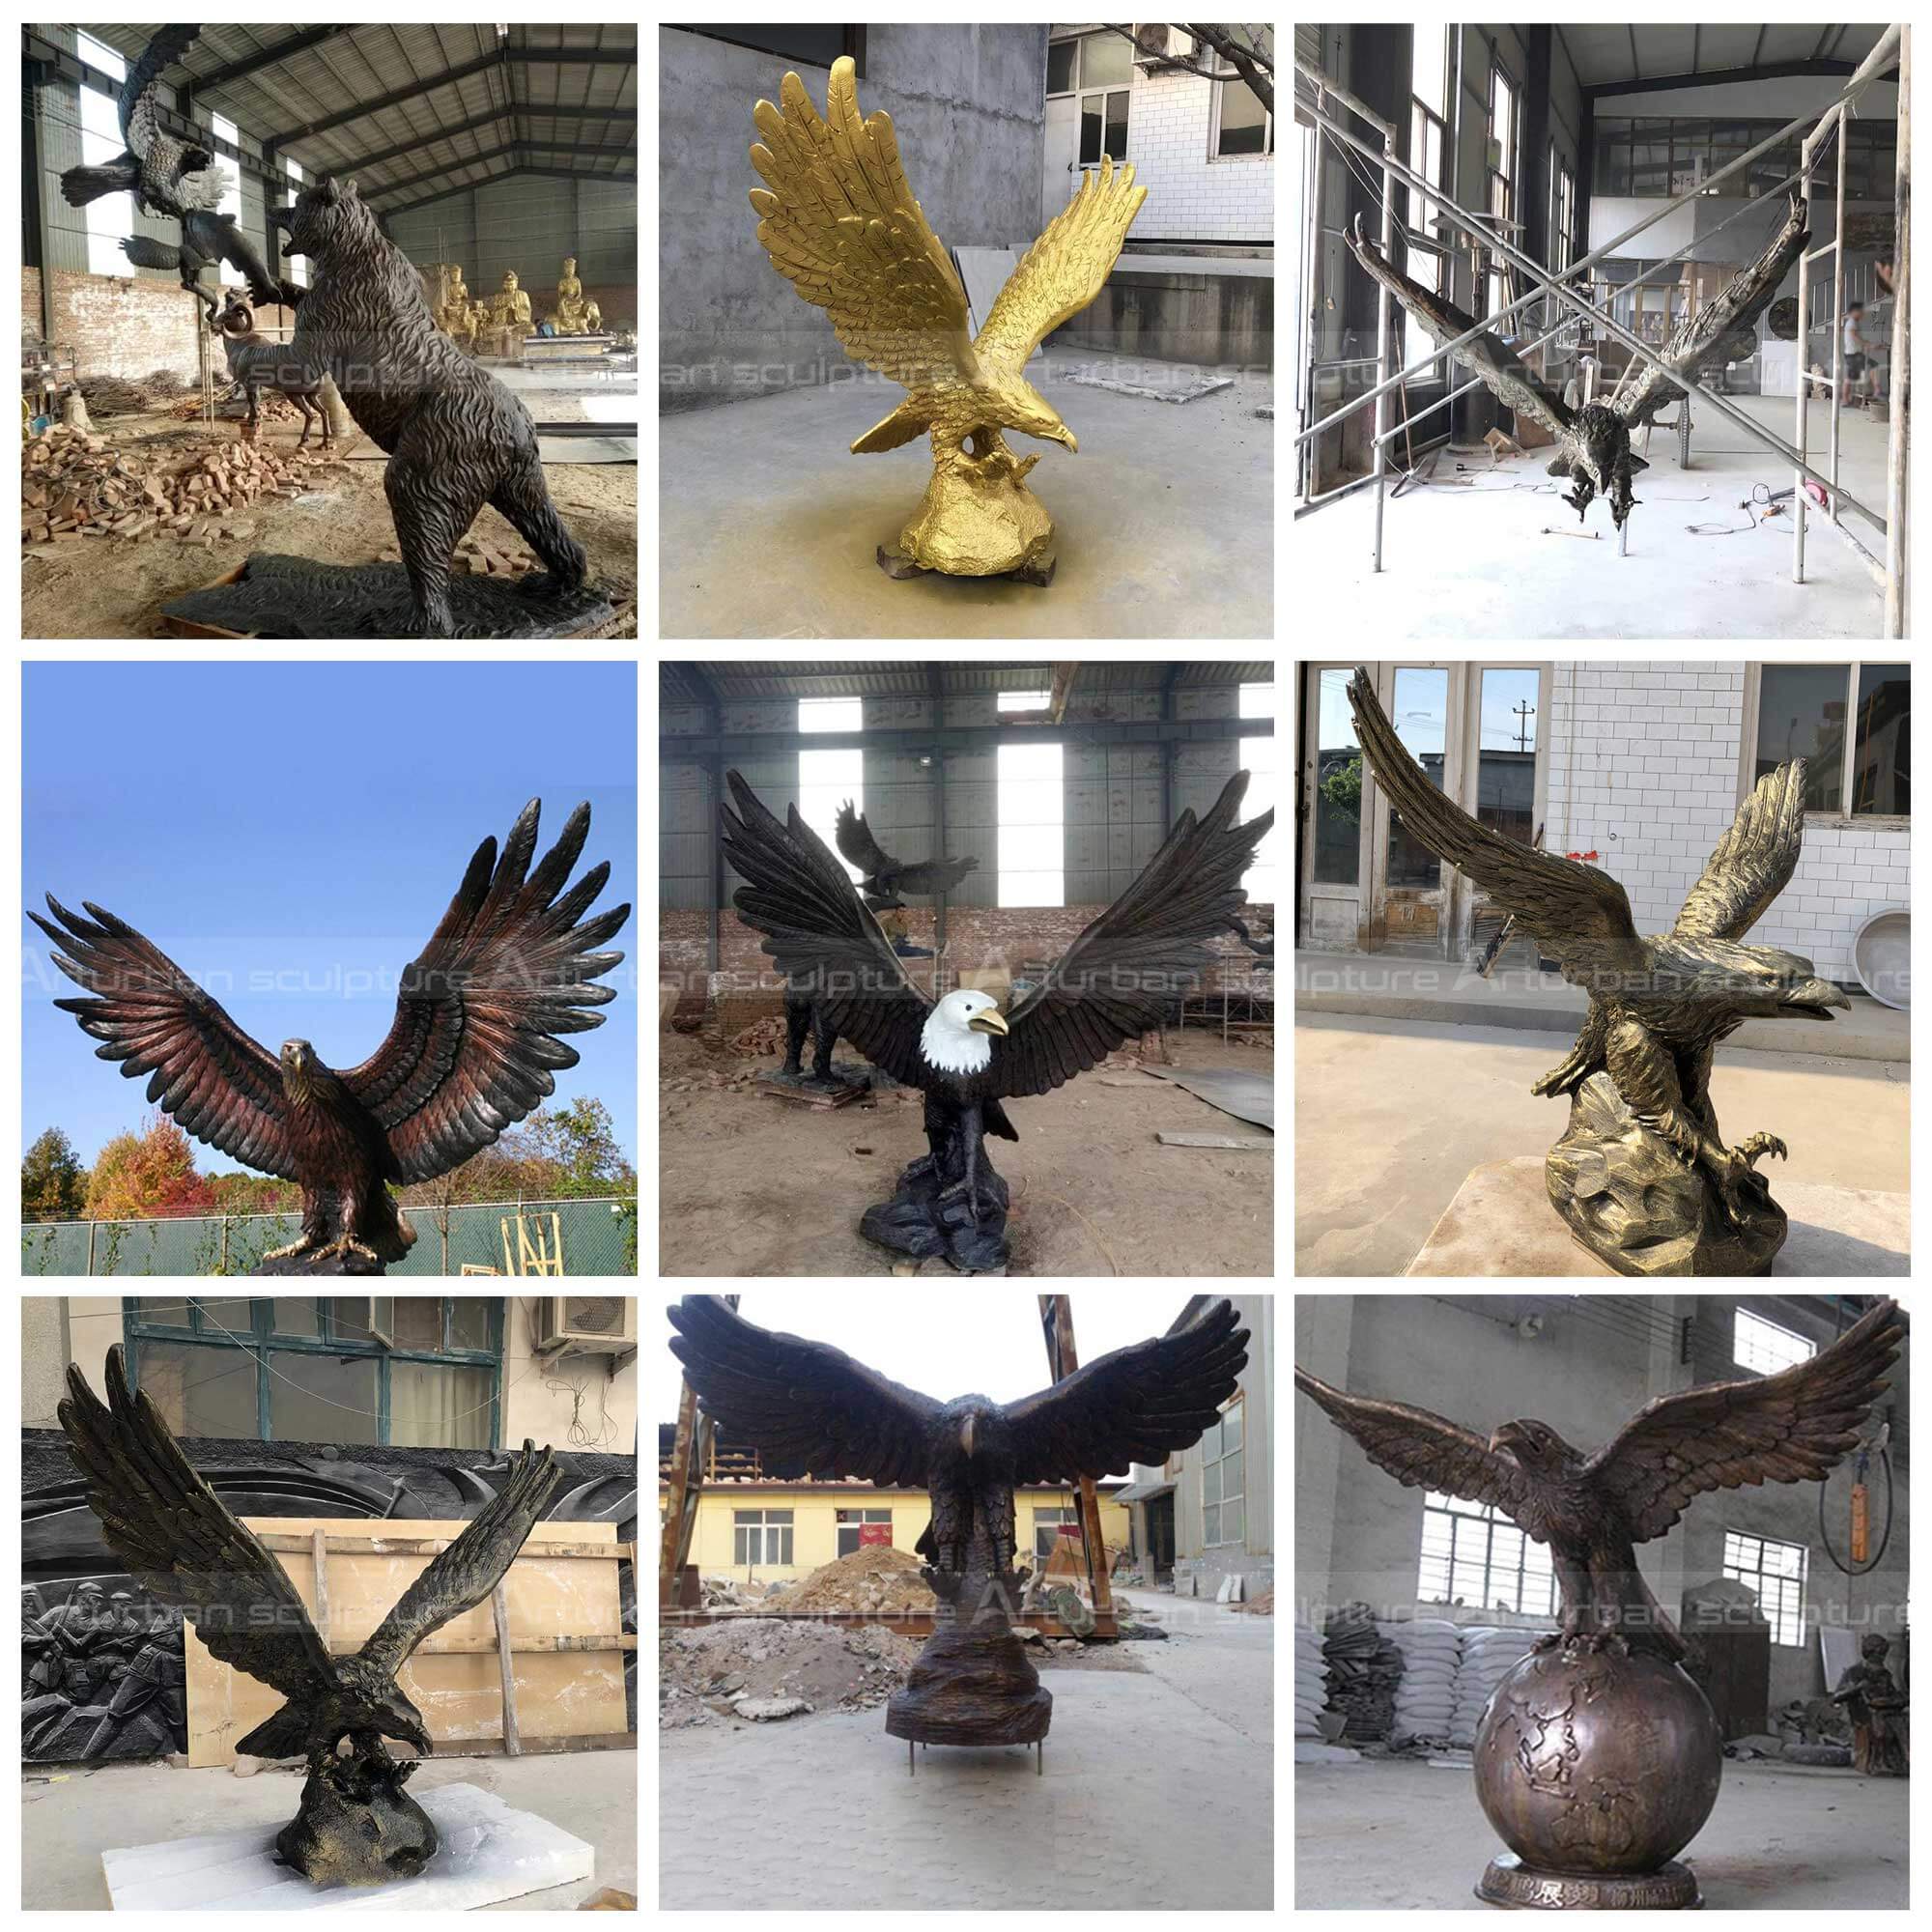 eagle sculpture